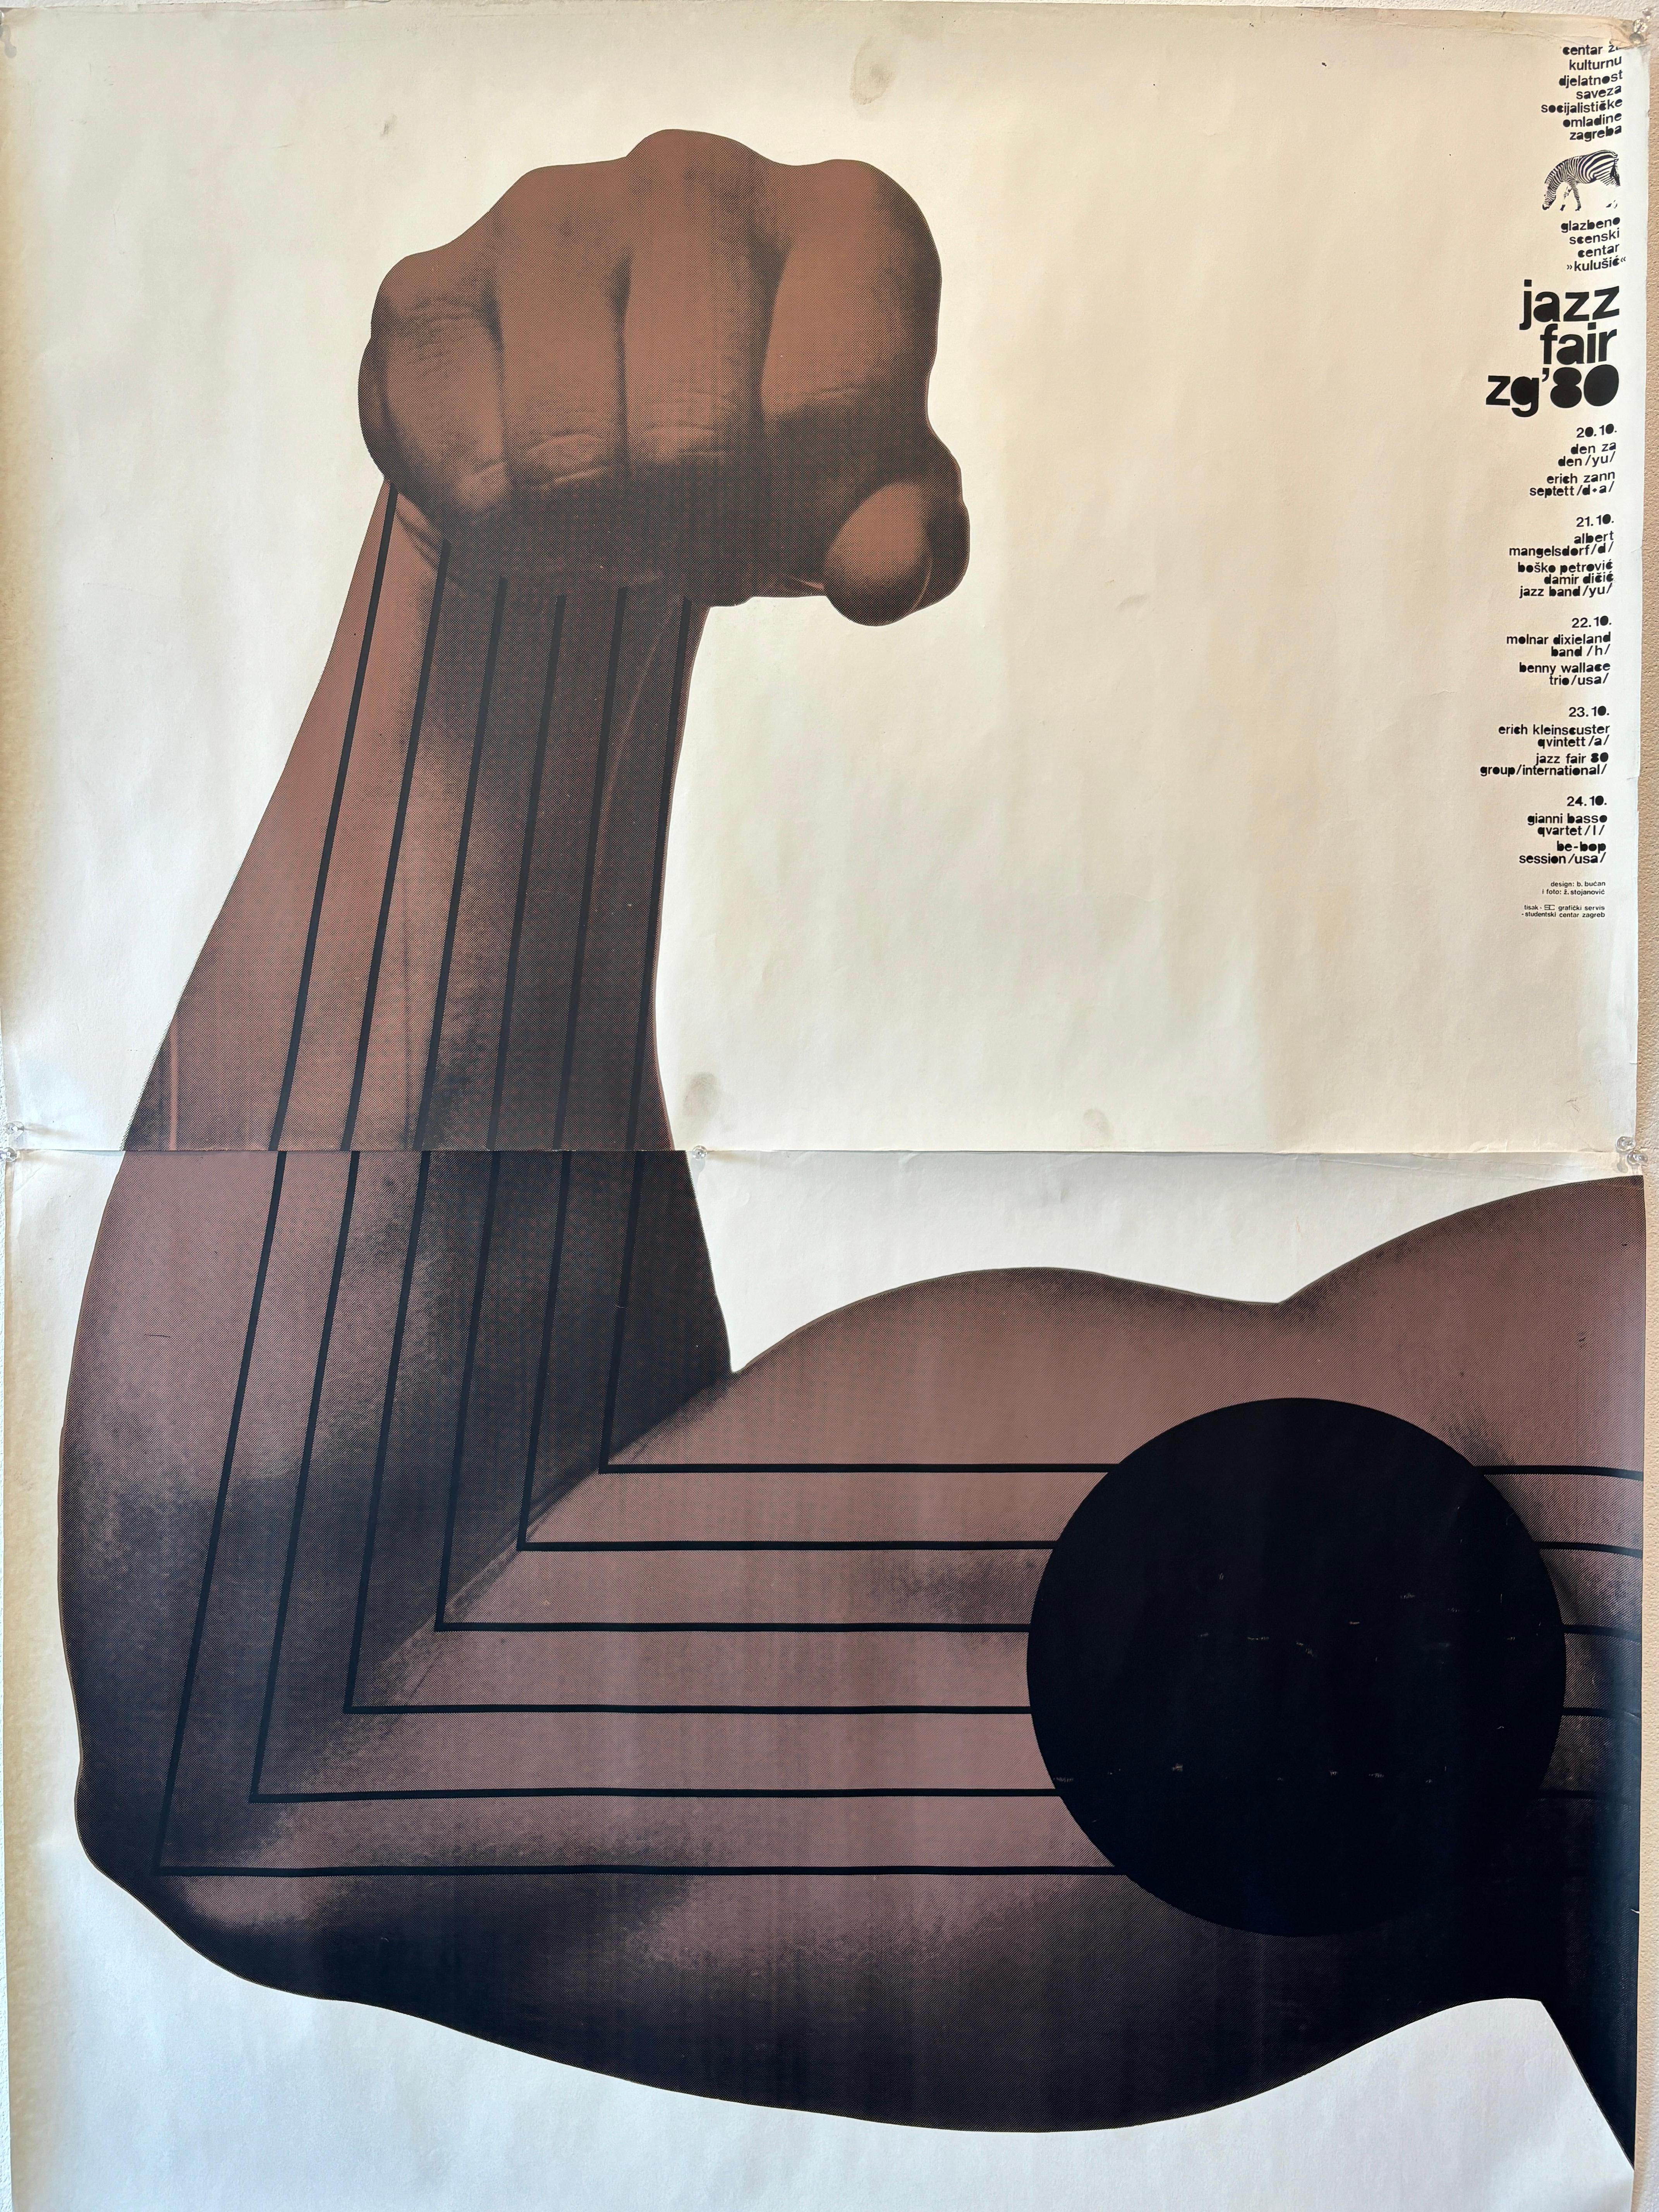 Modern BORIS BUCAN Two Sheet Silk-Screen Original Vintage Poster, Zagreb Jazz Fair 1980 For Sale